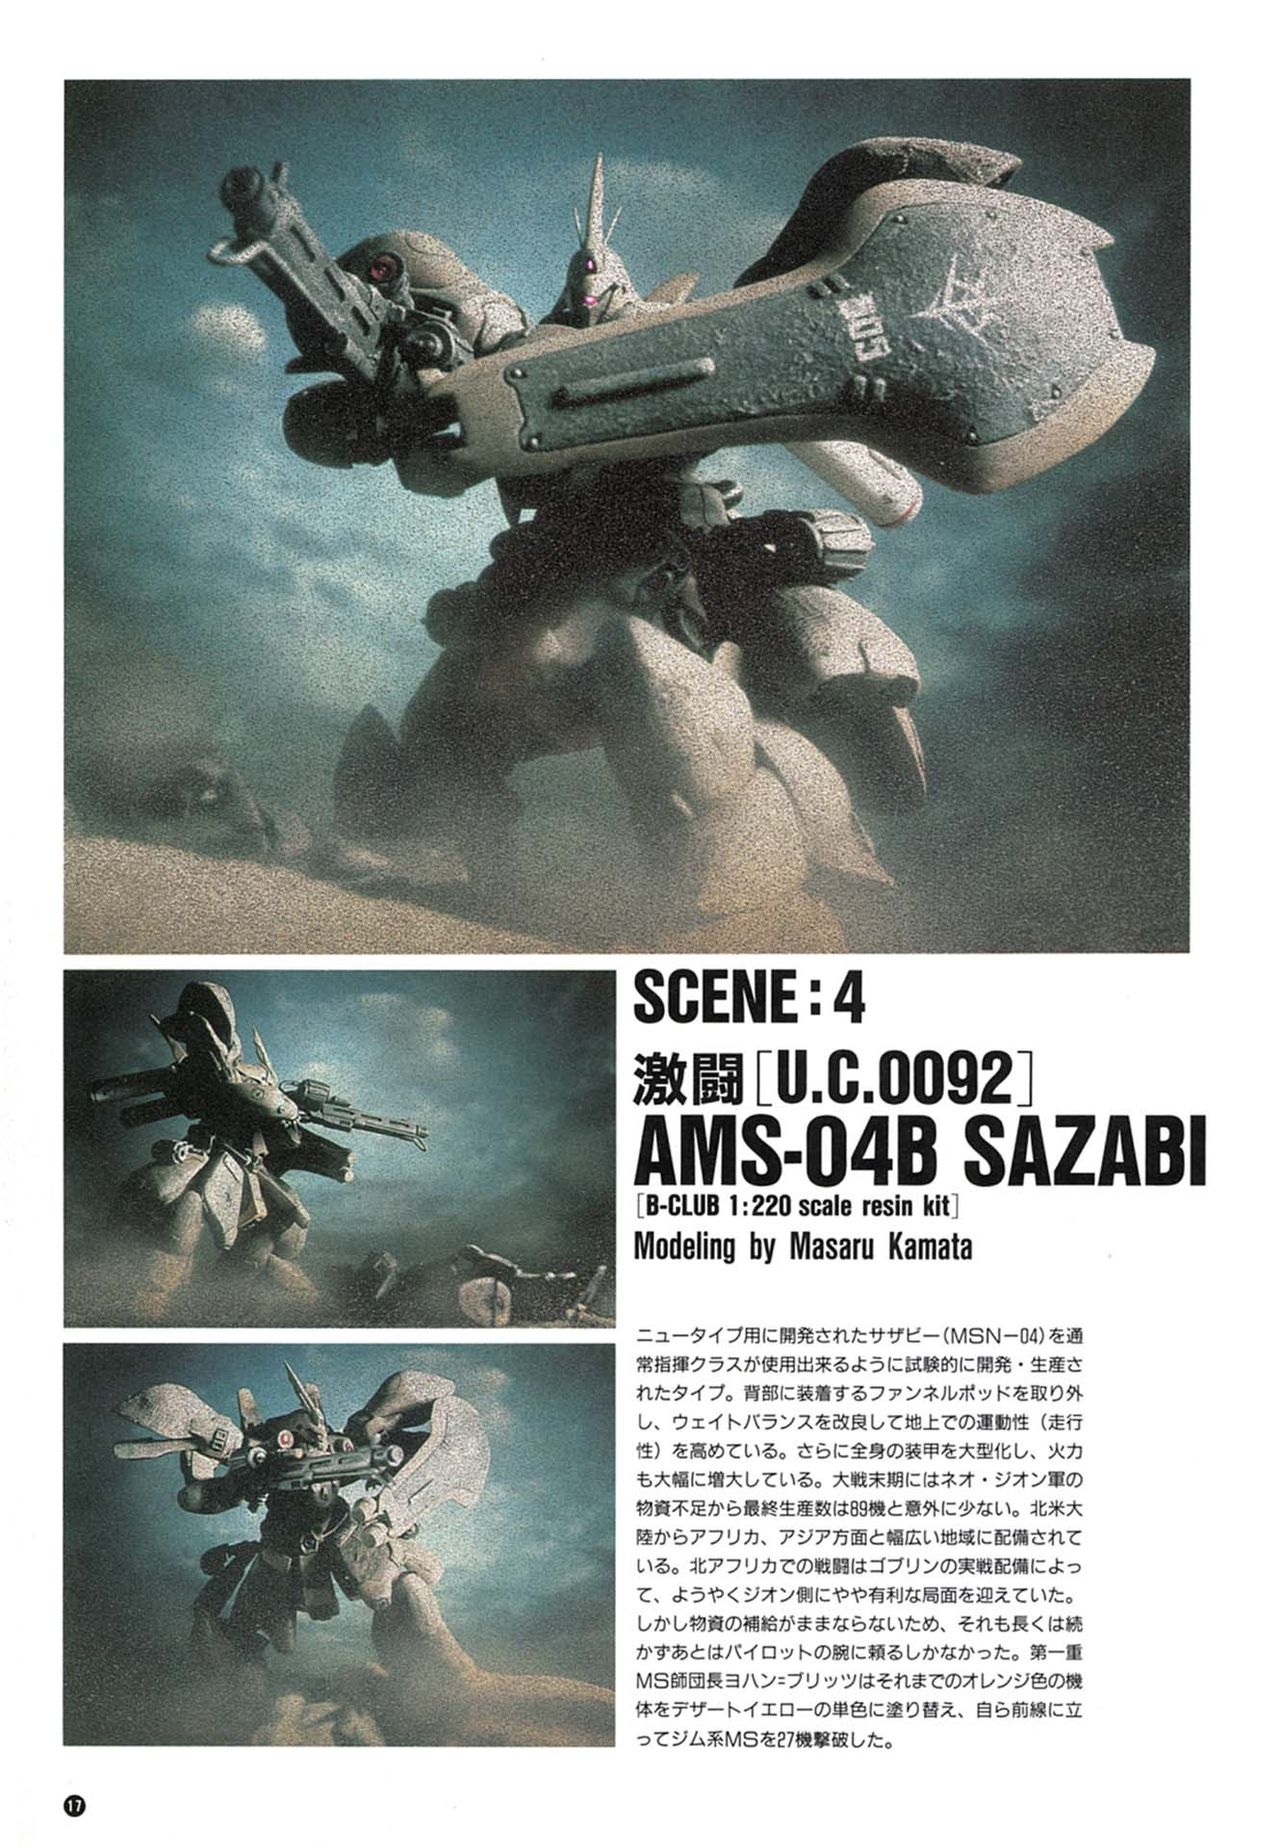 [Kazuhisa Kondo] Kazuhisa Kondo 2D & 3D Works - Go Ahead - From Mobile Suit Gundam to Original Mechanism 16